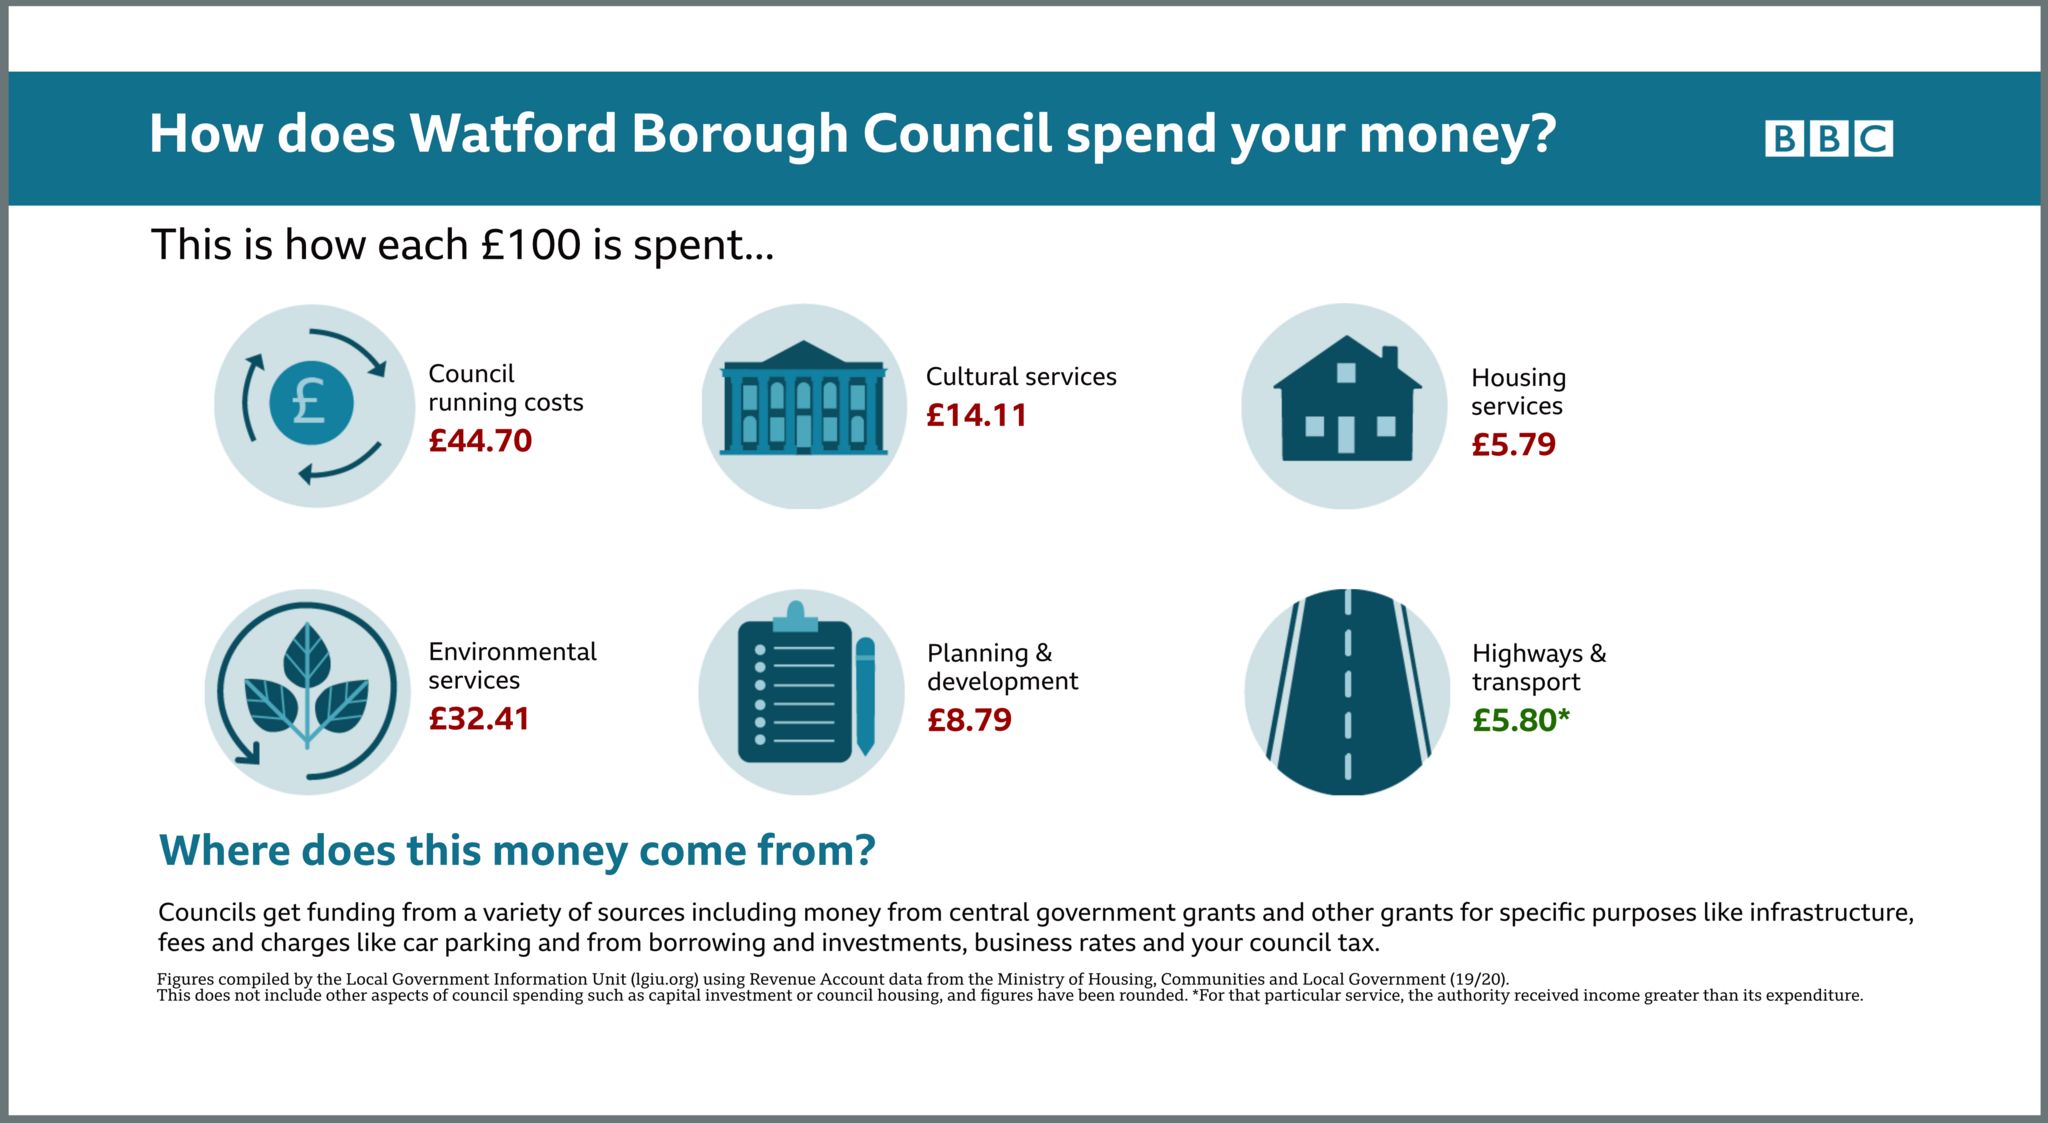 Watford Borough Council